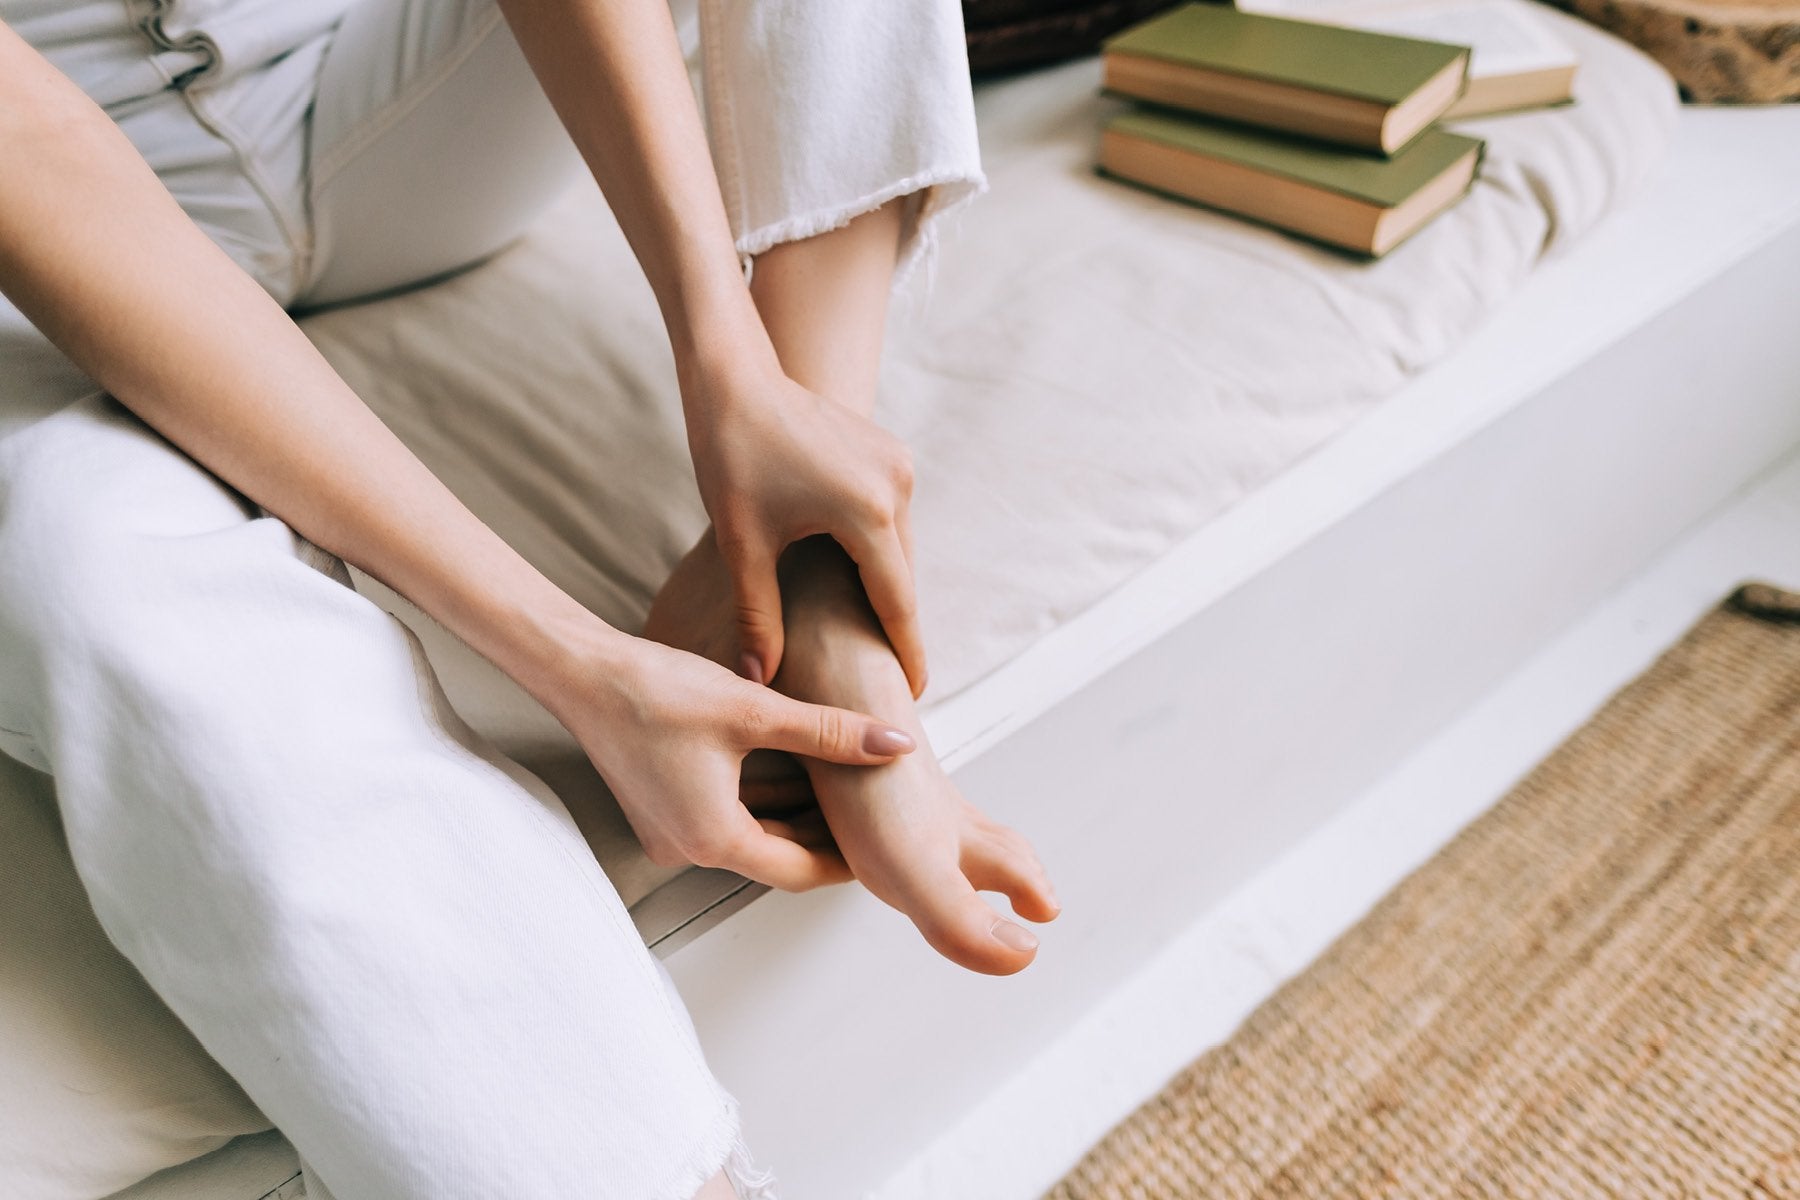 Woman giving herself a foot massage